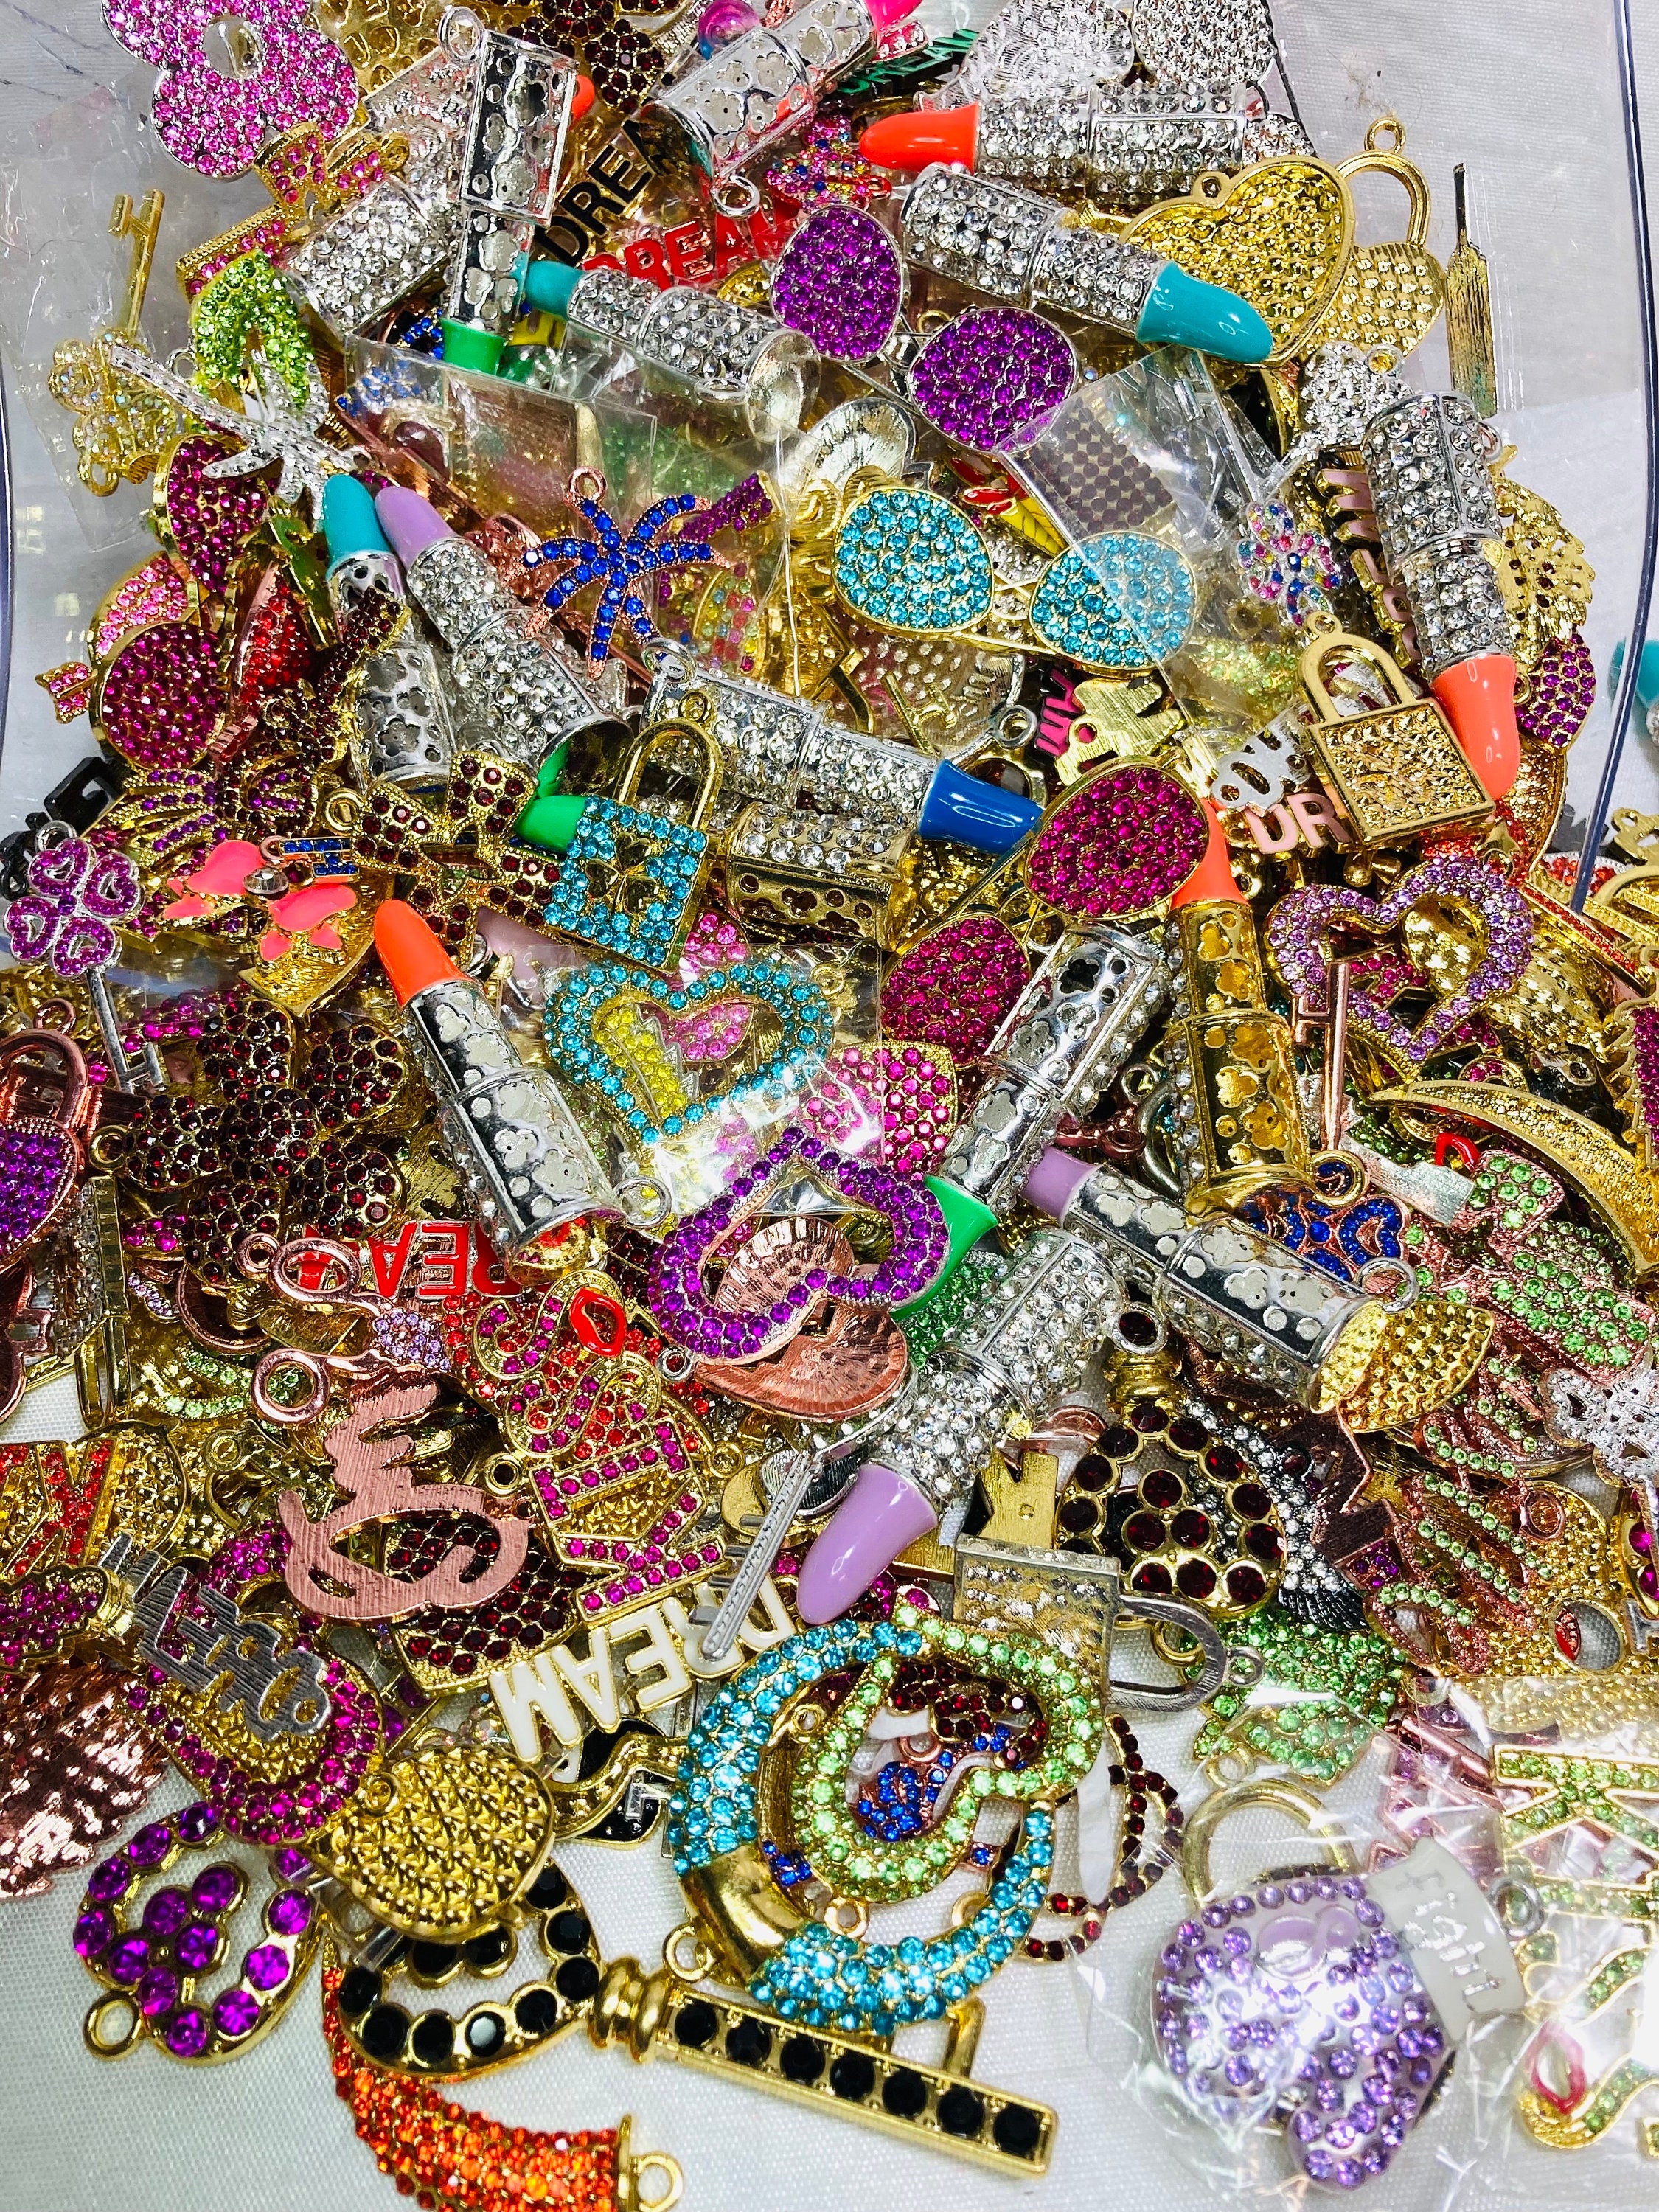 Pearl Charms for Bracelets, Jewelry Making Charms, Wholesale Mixed Charms,  Bangle Charms, Bulk Charms, USA Charm Vendor 